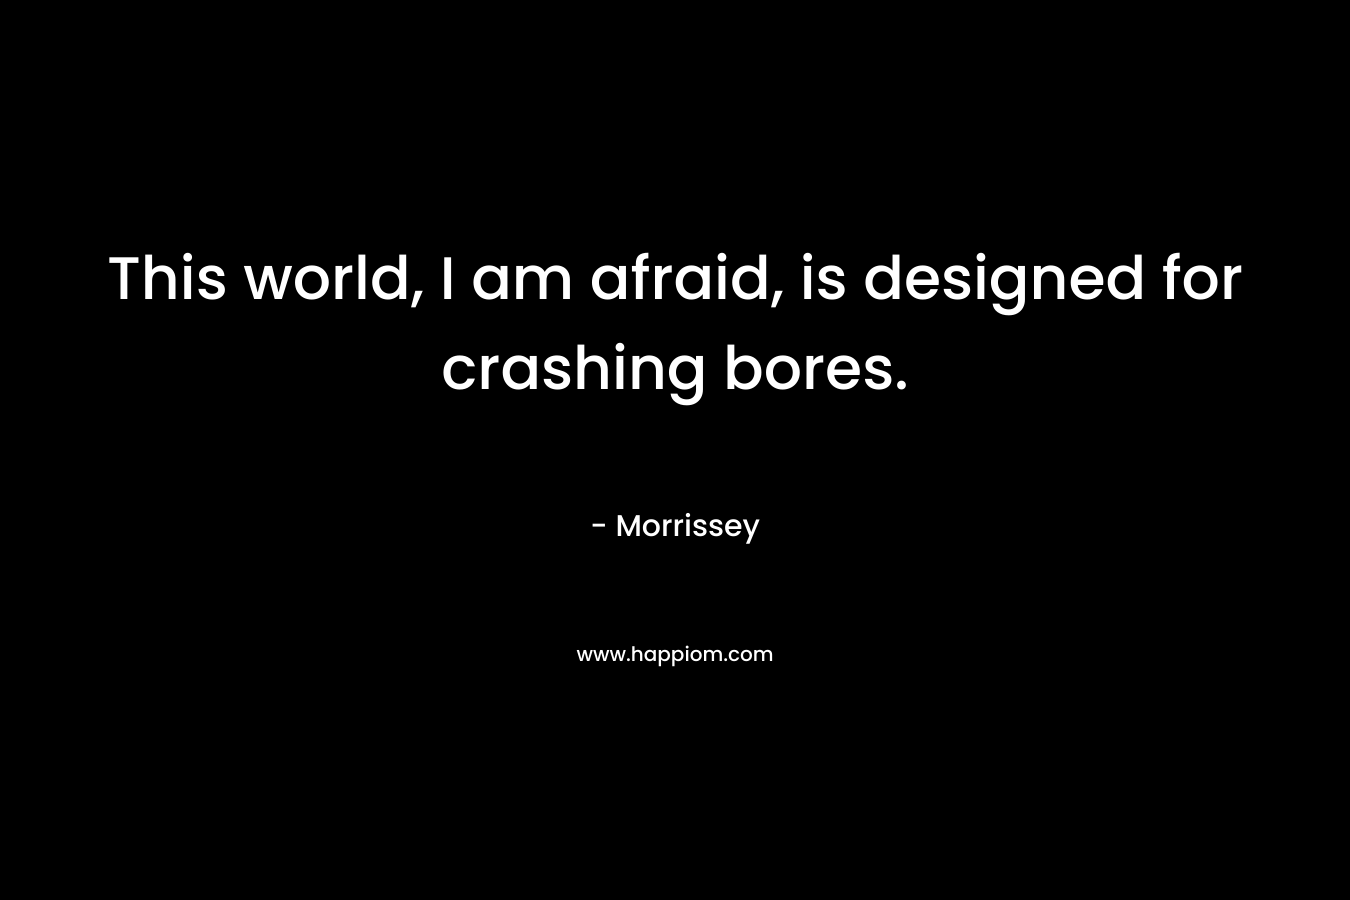 This world, I am afraid, is designed for crashing bores.